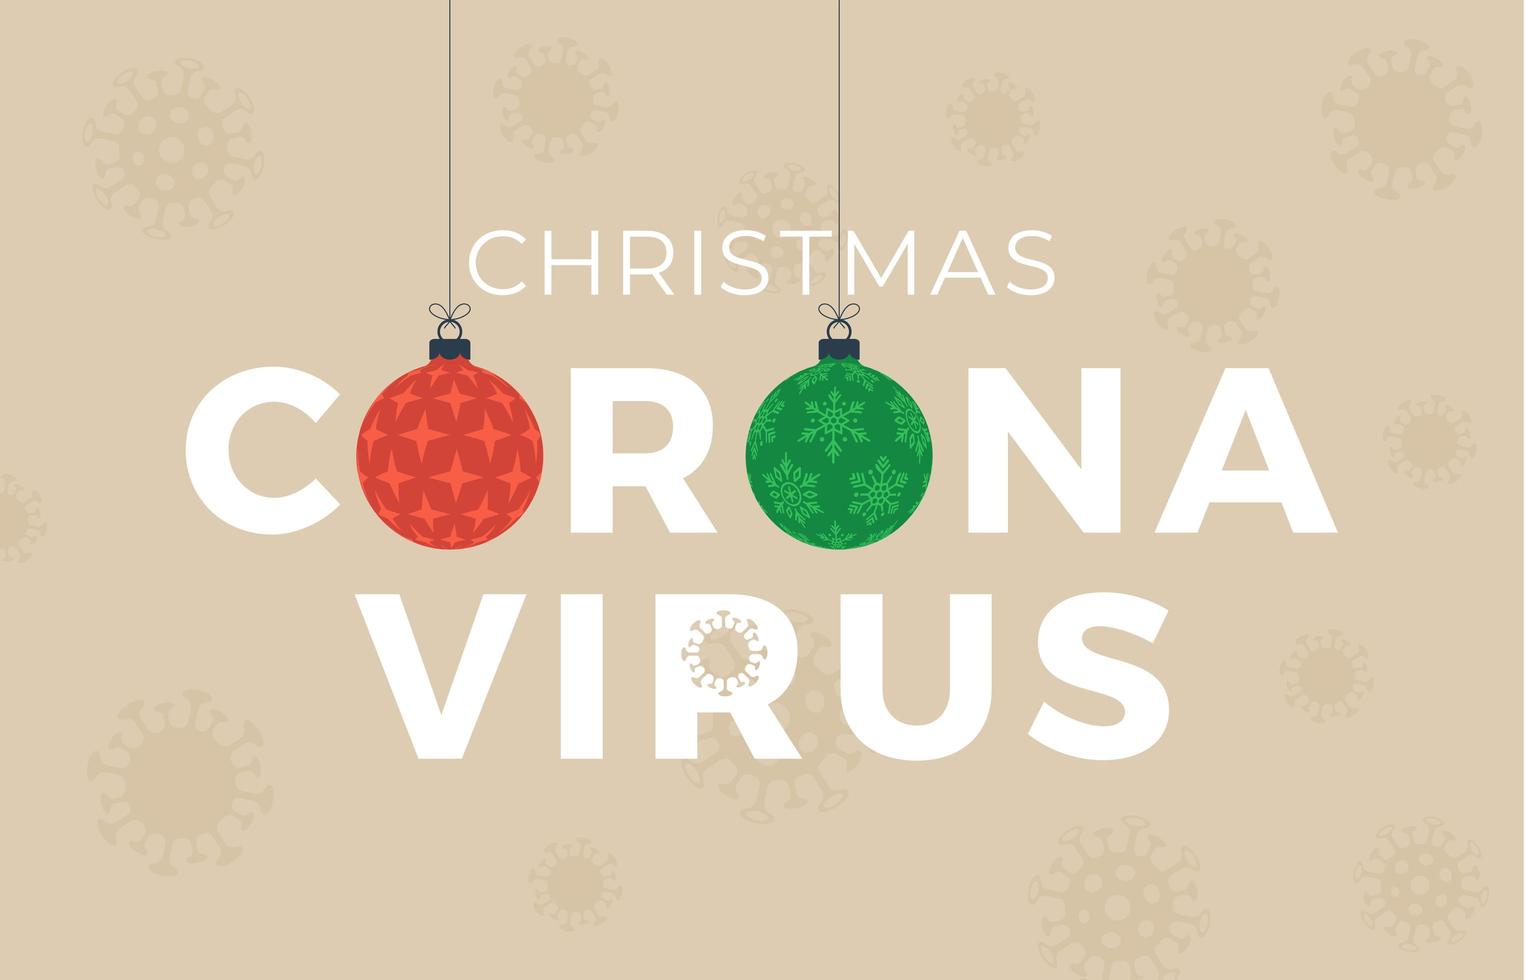 Coronavirus Christmas concept vector